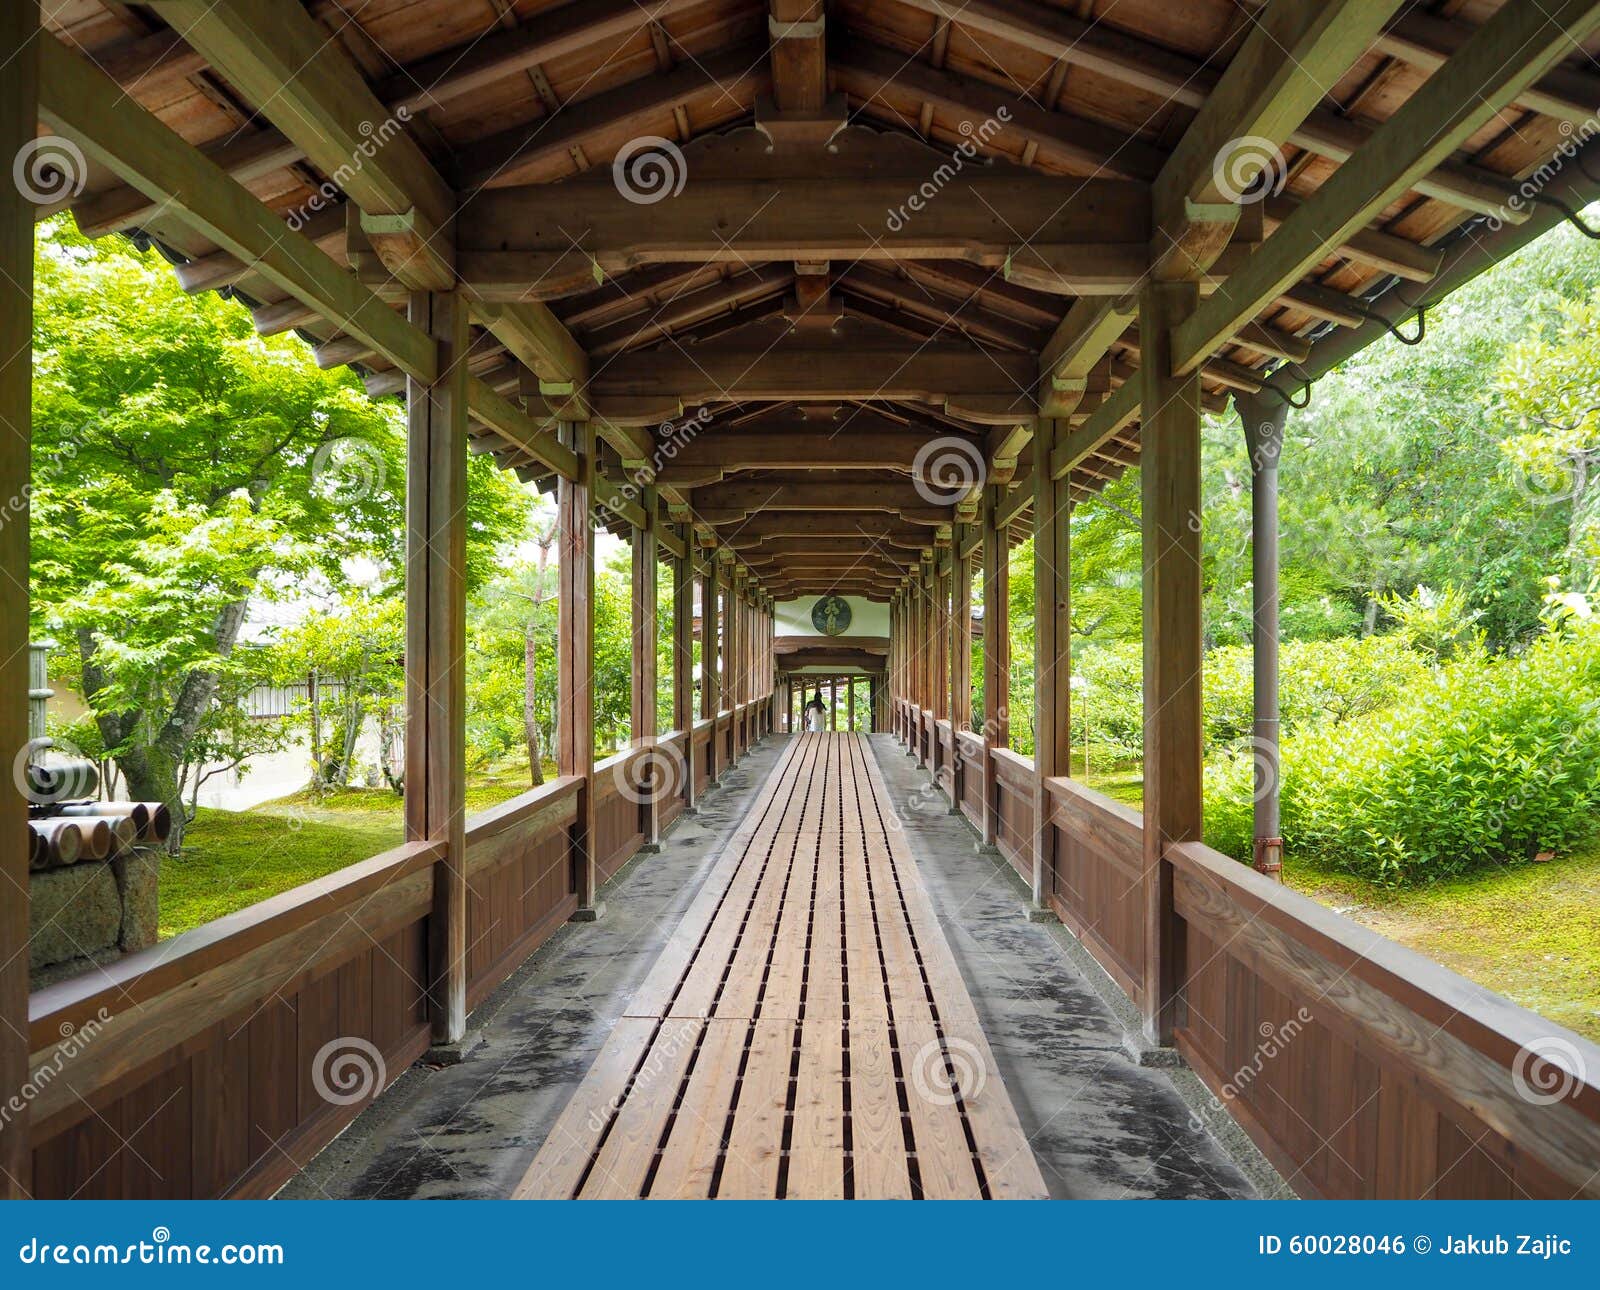 Japanese Garden walkway stock photo. Image of dead, altar ...